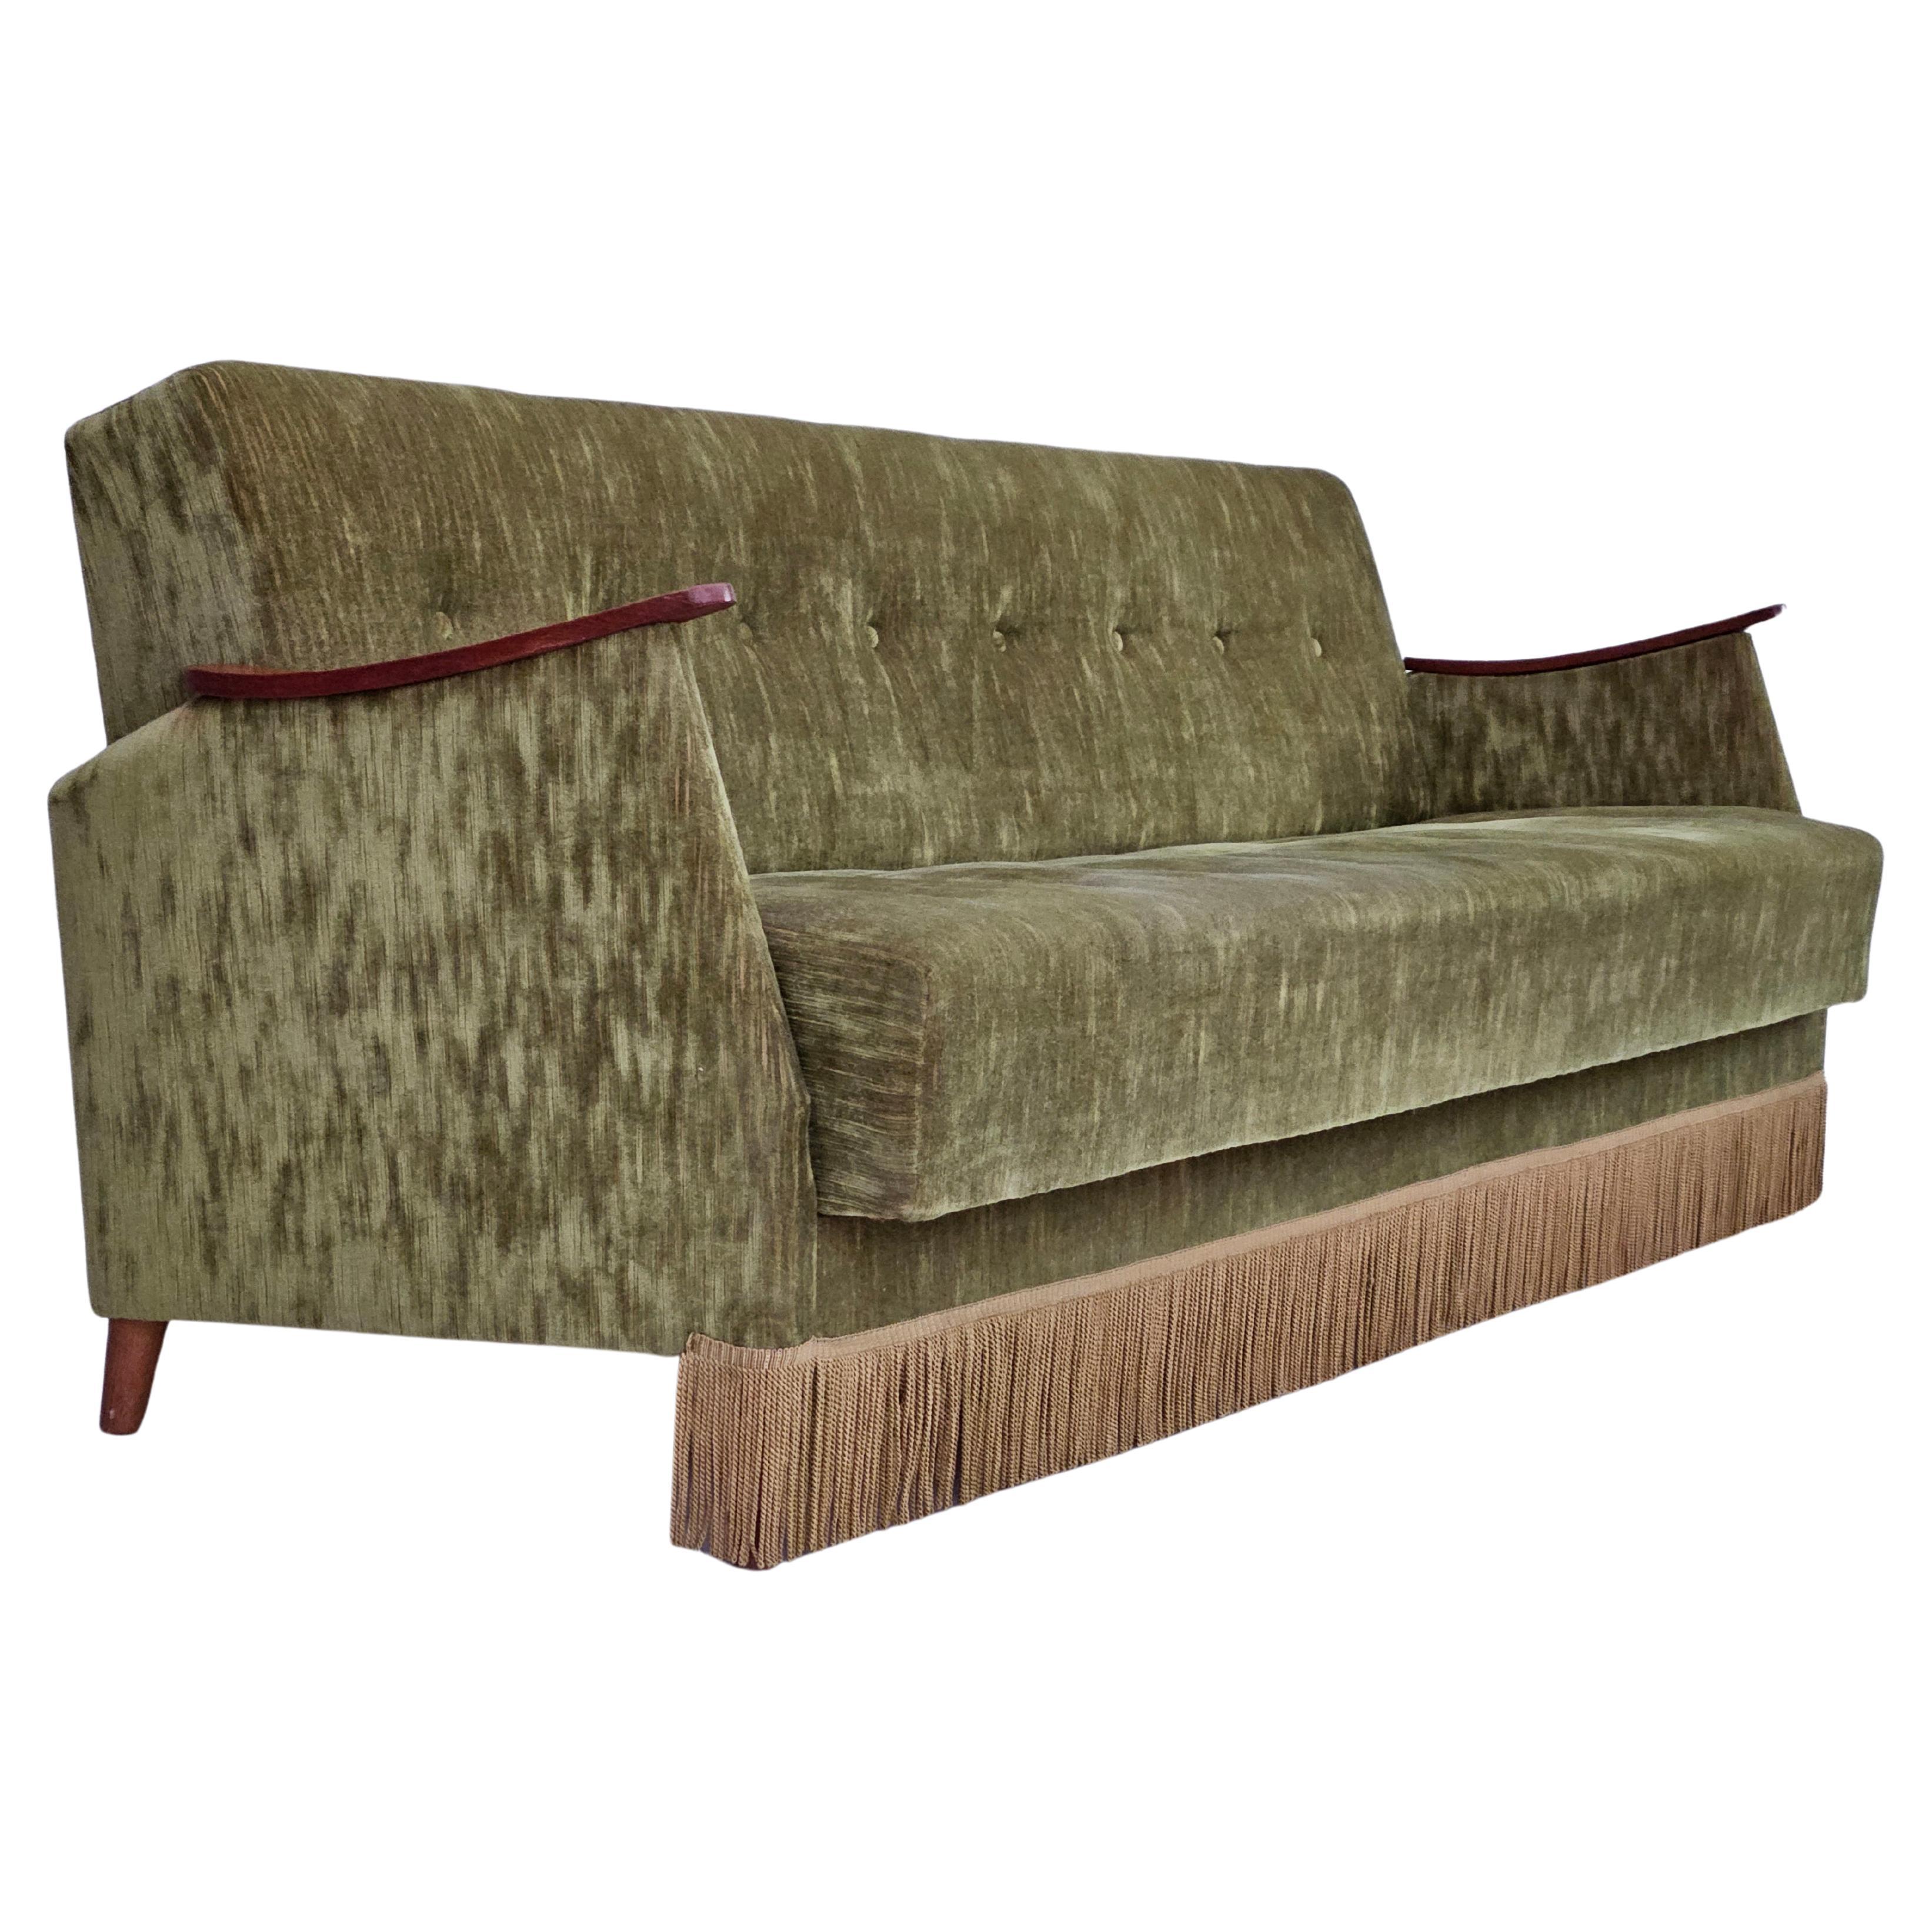 1970s, Danish sleeping foldable sofa, original very good condition. For Sale